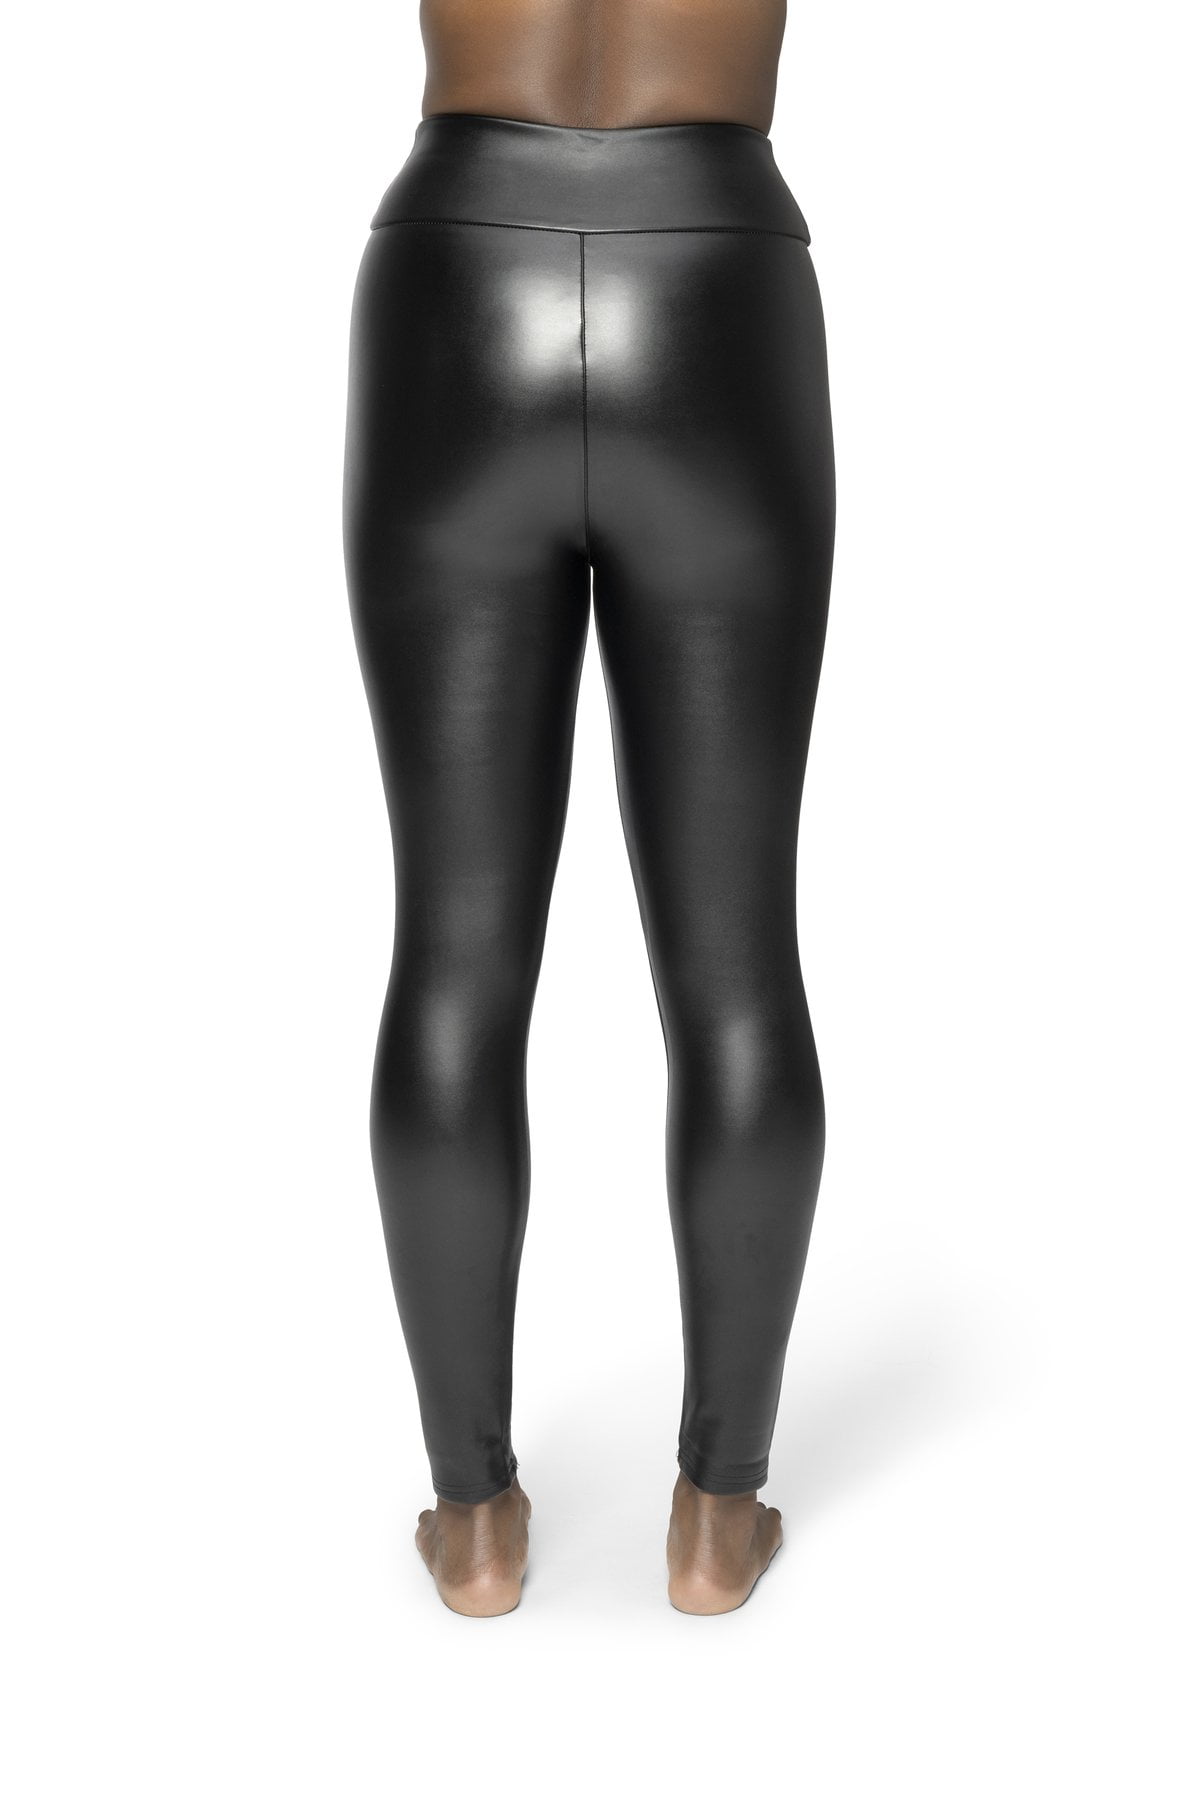 Robert Matthew Faux Leather Leggings - Bodacious High Waisted Tummy Control  Fashion Leggings for Women, Womens High Waist Skinny Pants, Black Stretchy